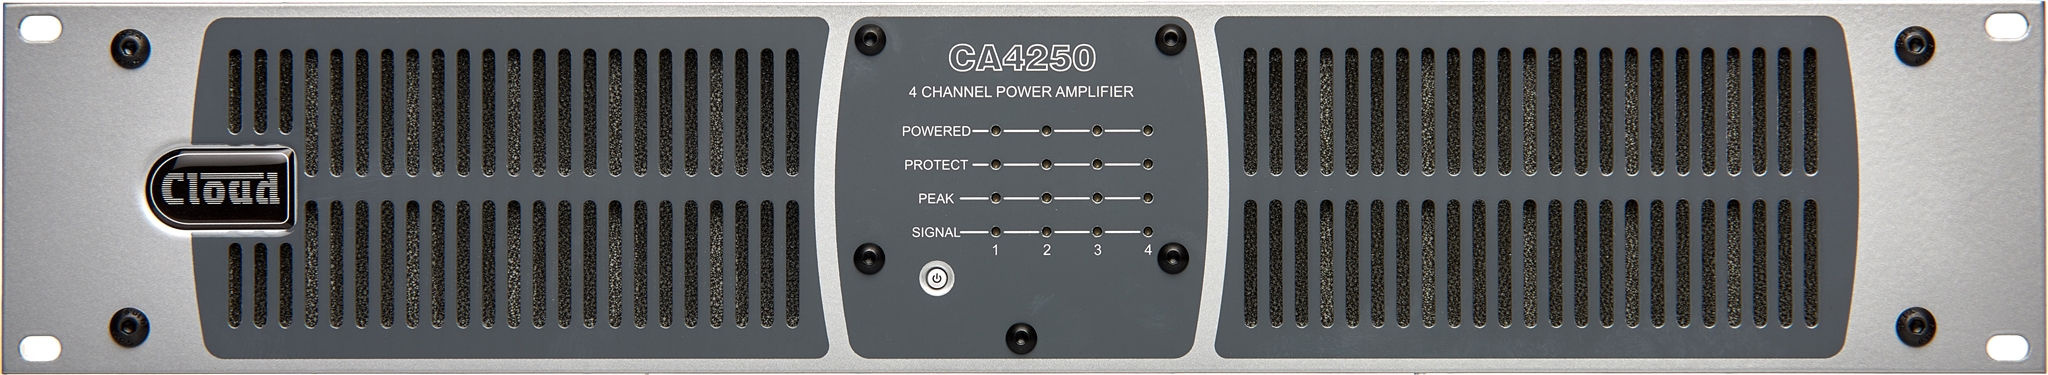 4 Channel Amplifier 250w Per Output Channel - CLOUD (ENGLAND) _ CA4250